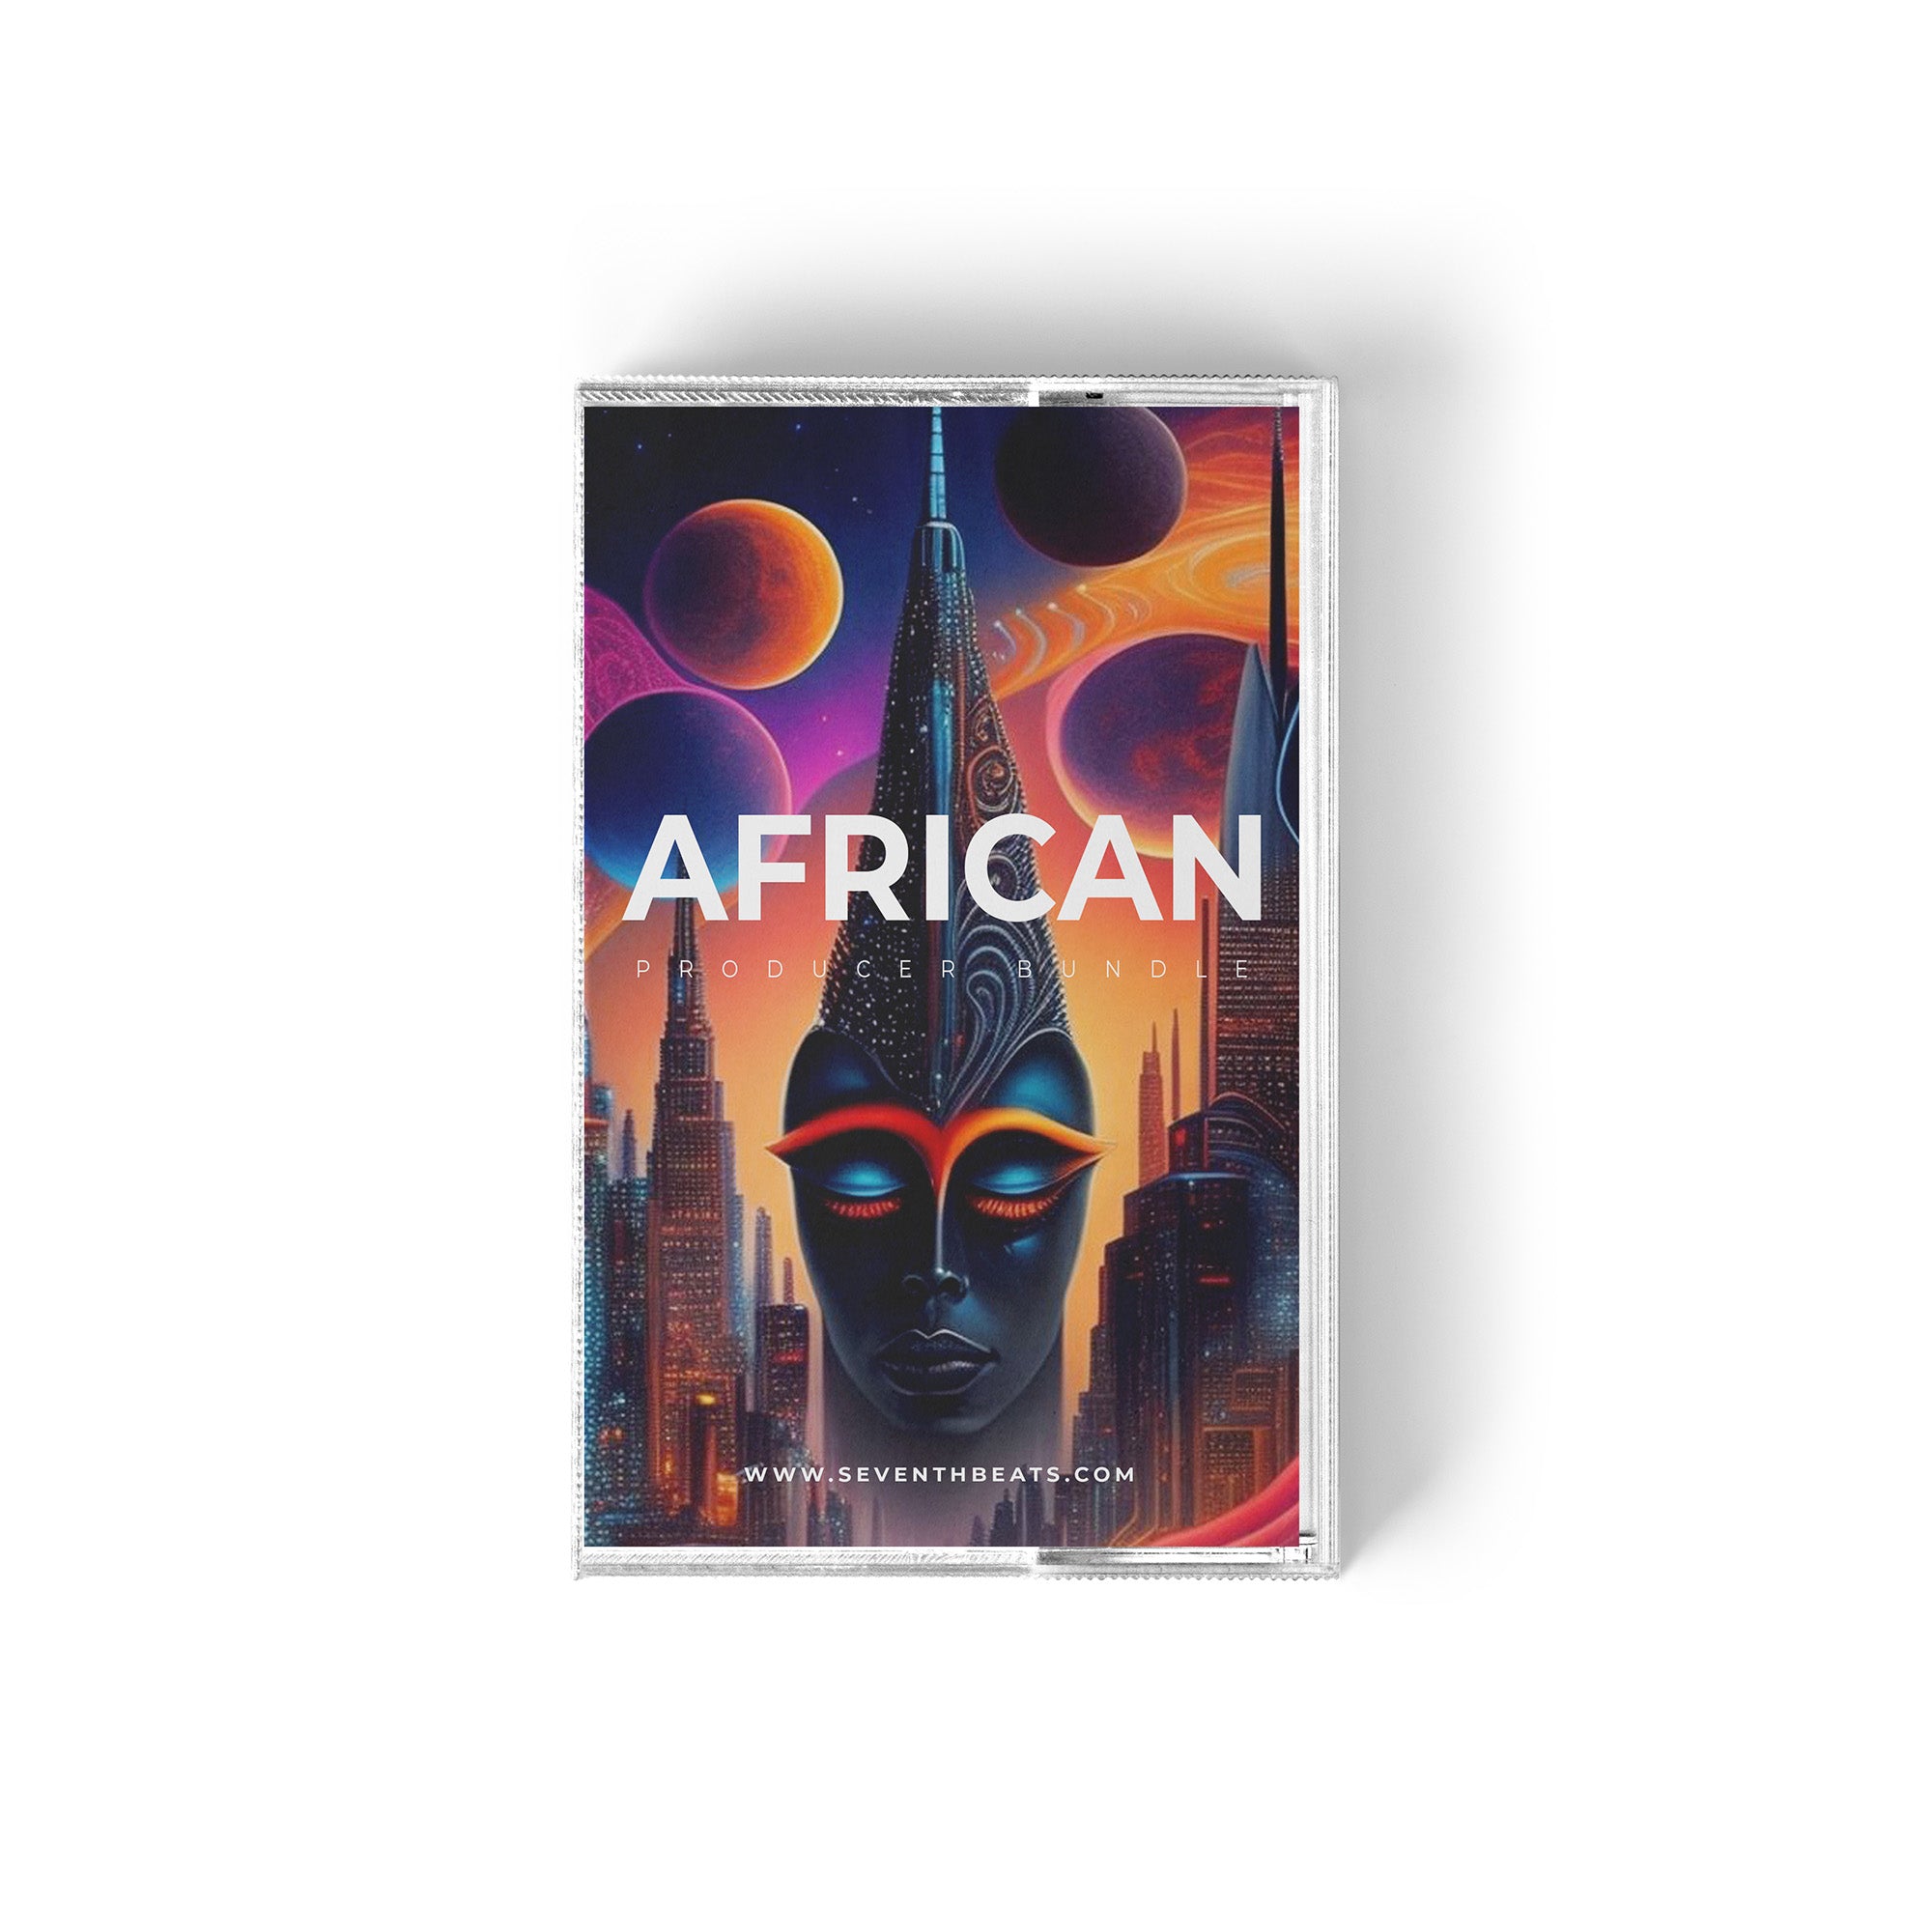 AFRICAN Producer Bundle